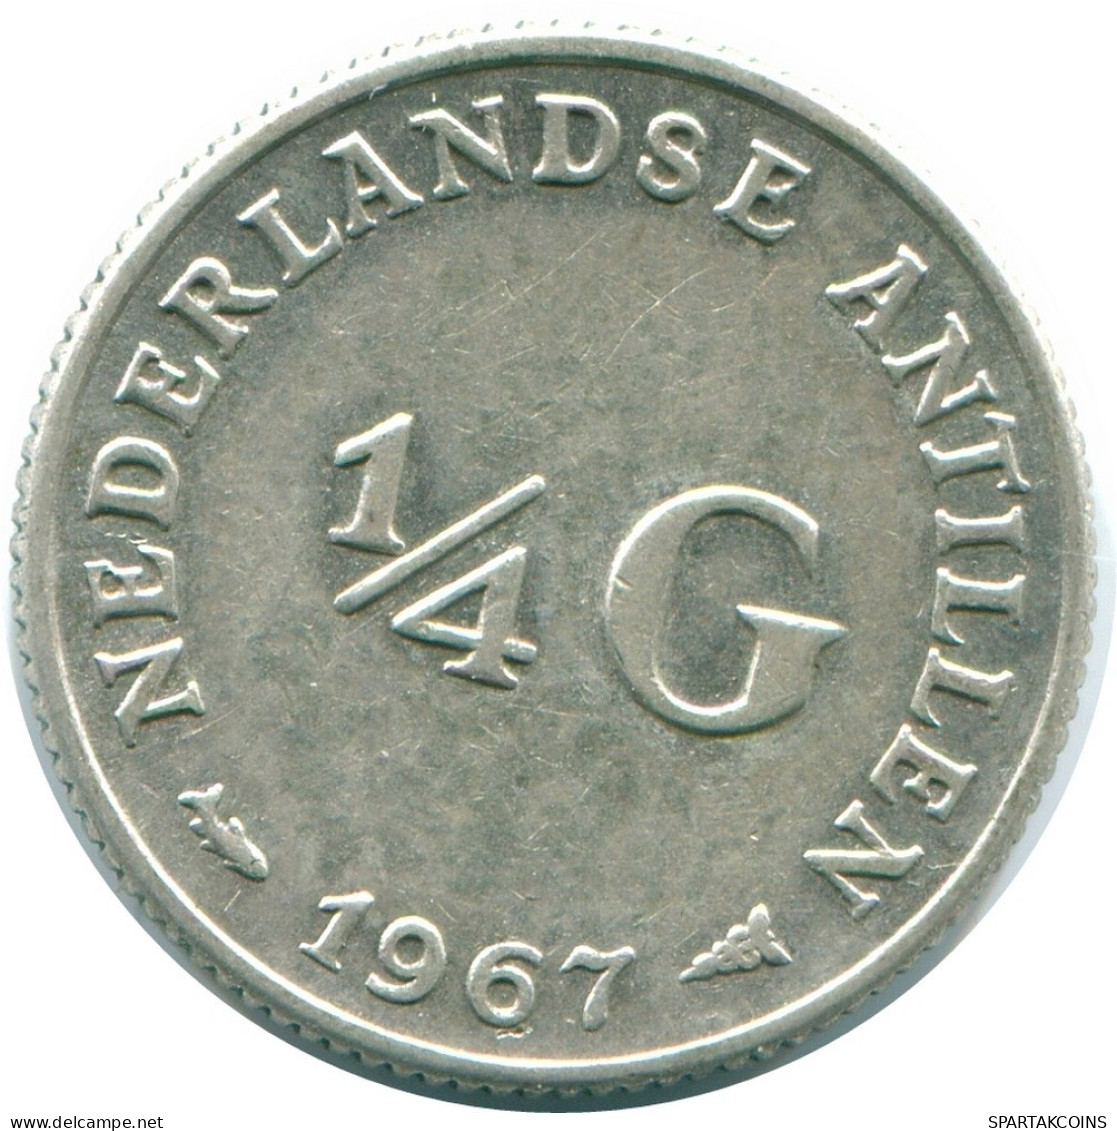 1/4 GULDEN 1967 NETHERLANDS ANTILLES SILVER Colonial Coin #NL11454.4.U.A - Antilles Néerlandaises